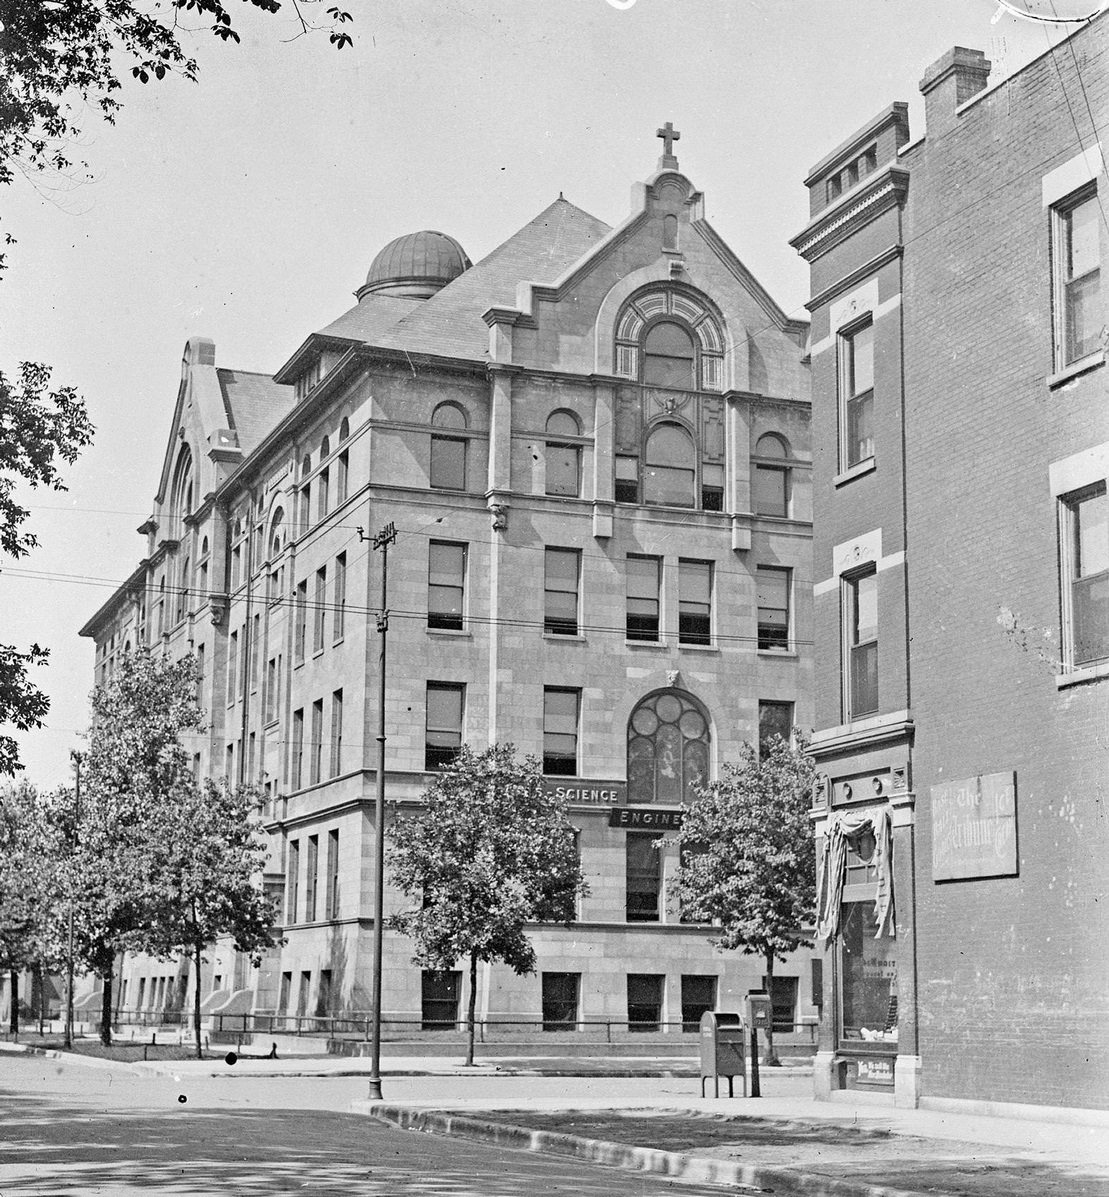 Exterior of DePaul University building, Chicago, Illinois, 1911.